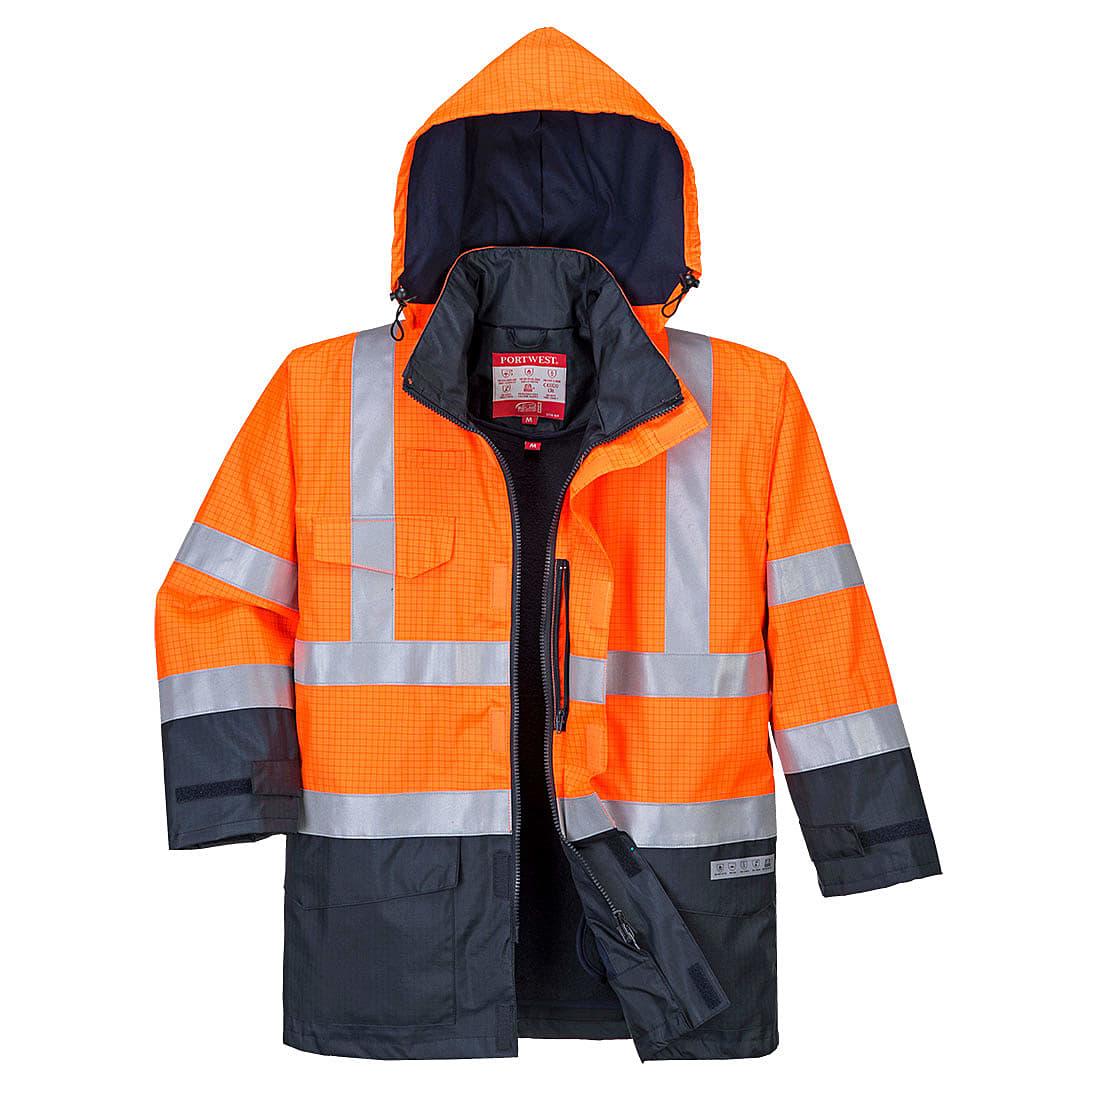 Portwest Bizflame Rain Hi-Viz Multi-Protection Jacket in Orange / Navy (Product Code: S779)